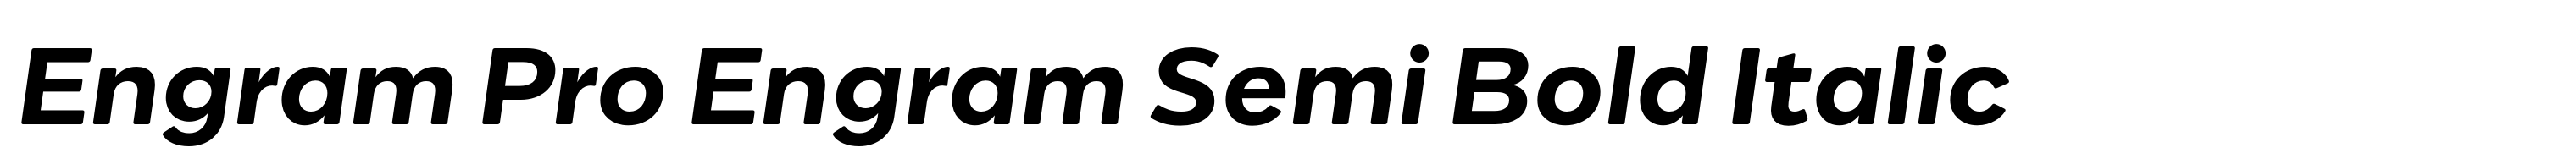 Engram Pro Engram Semi Bold Italic